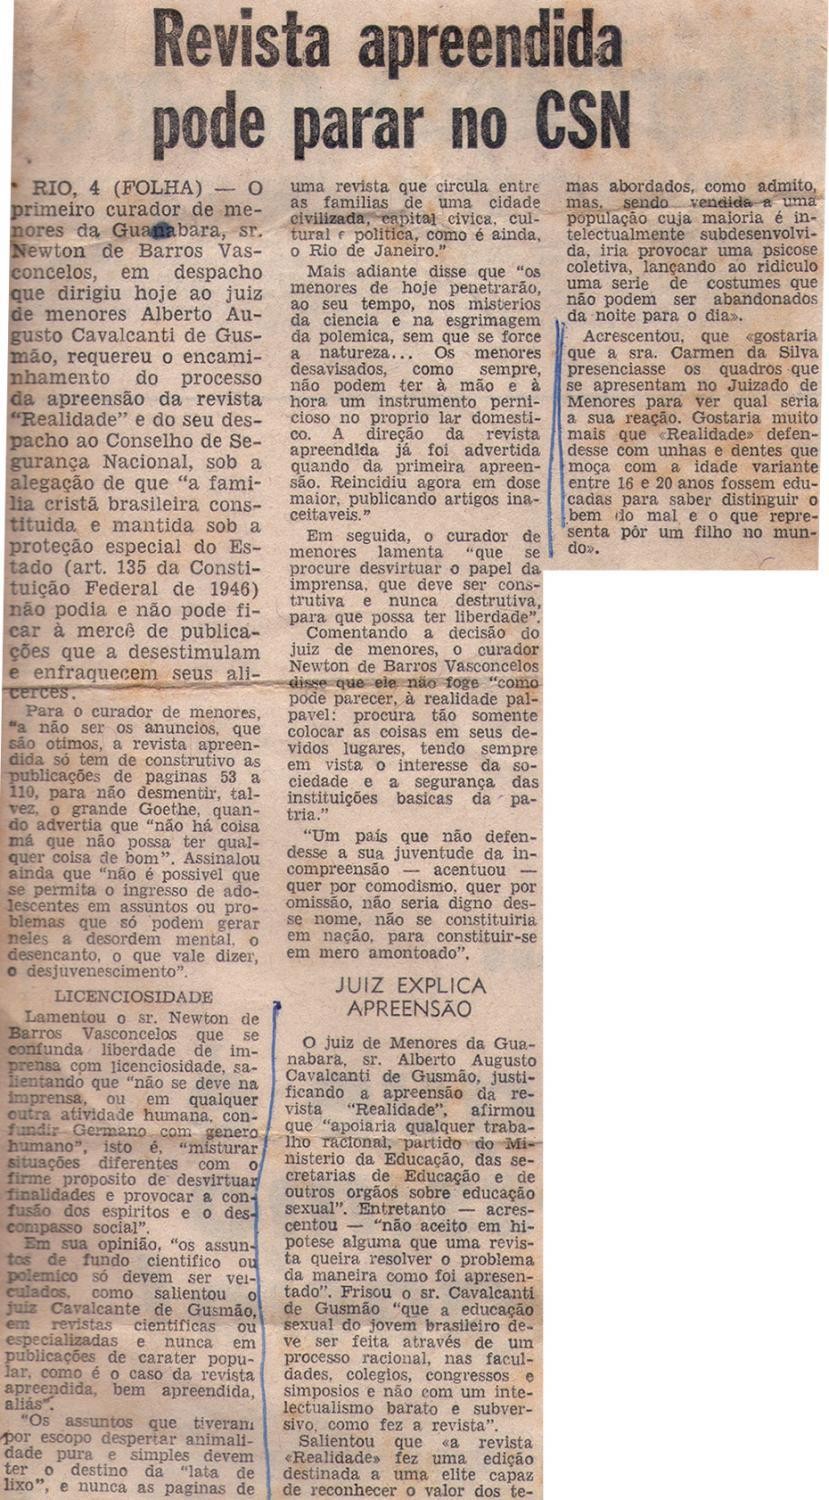 Abril de 1966. Revista apreendida pode parar no CSN.